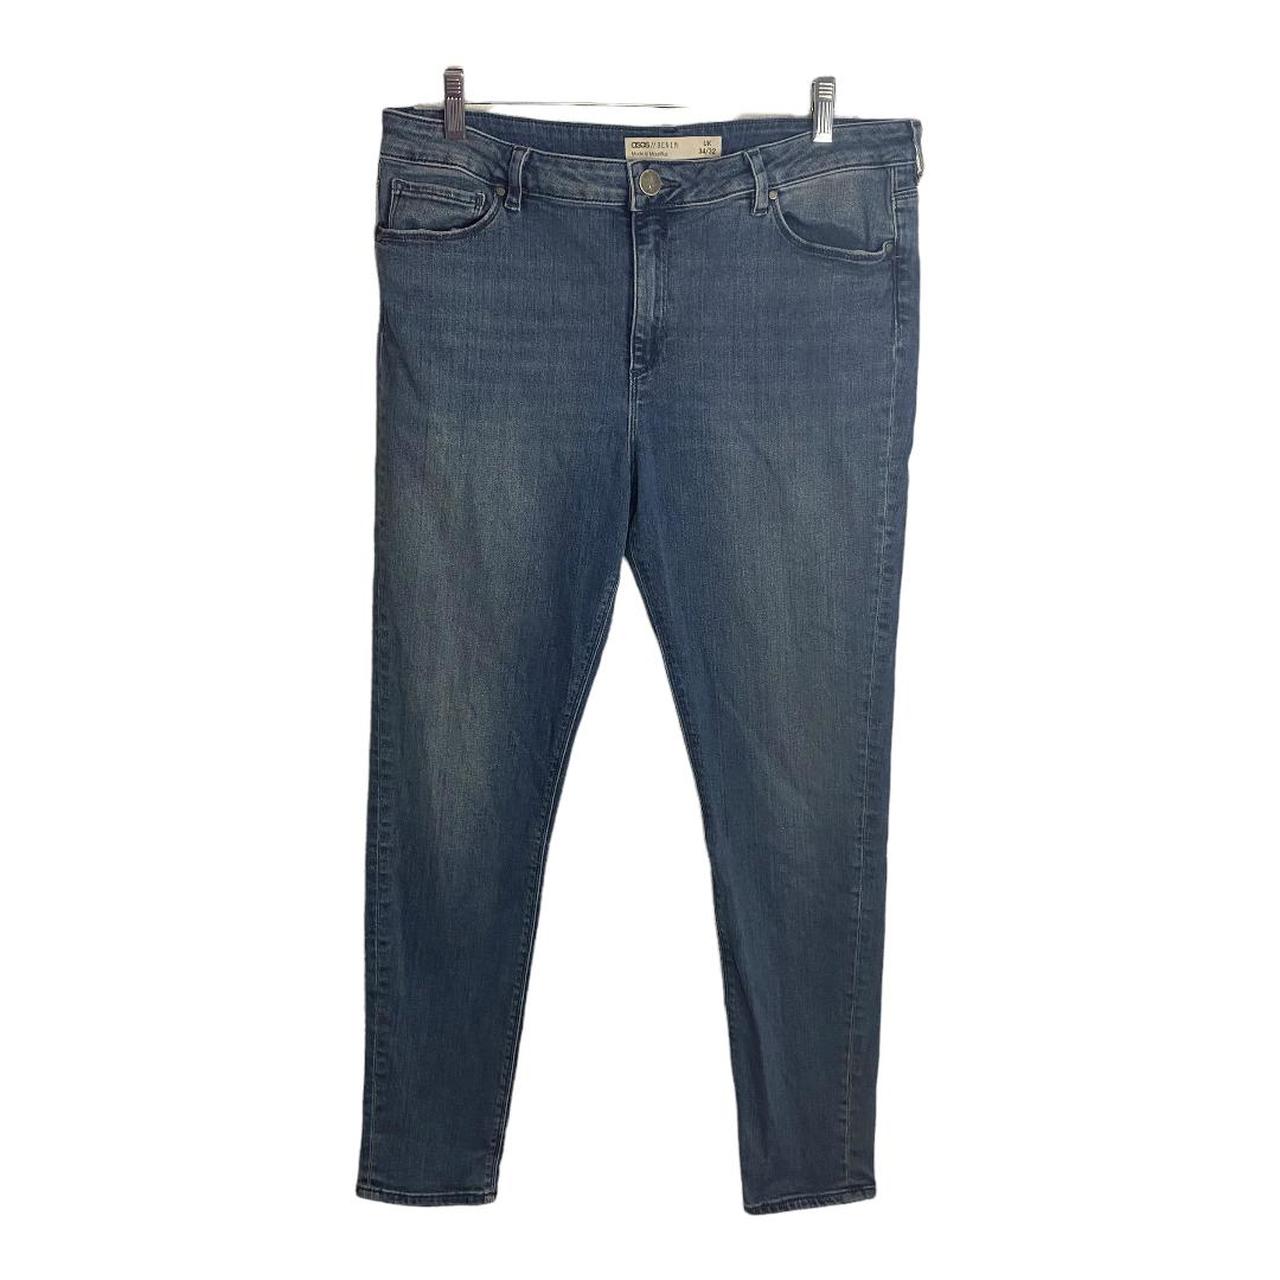 Product Image 1 - ASOS Denim Jeans Size 34